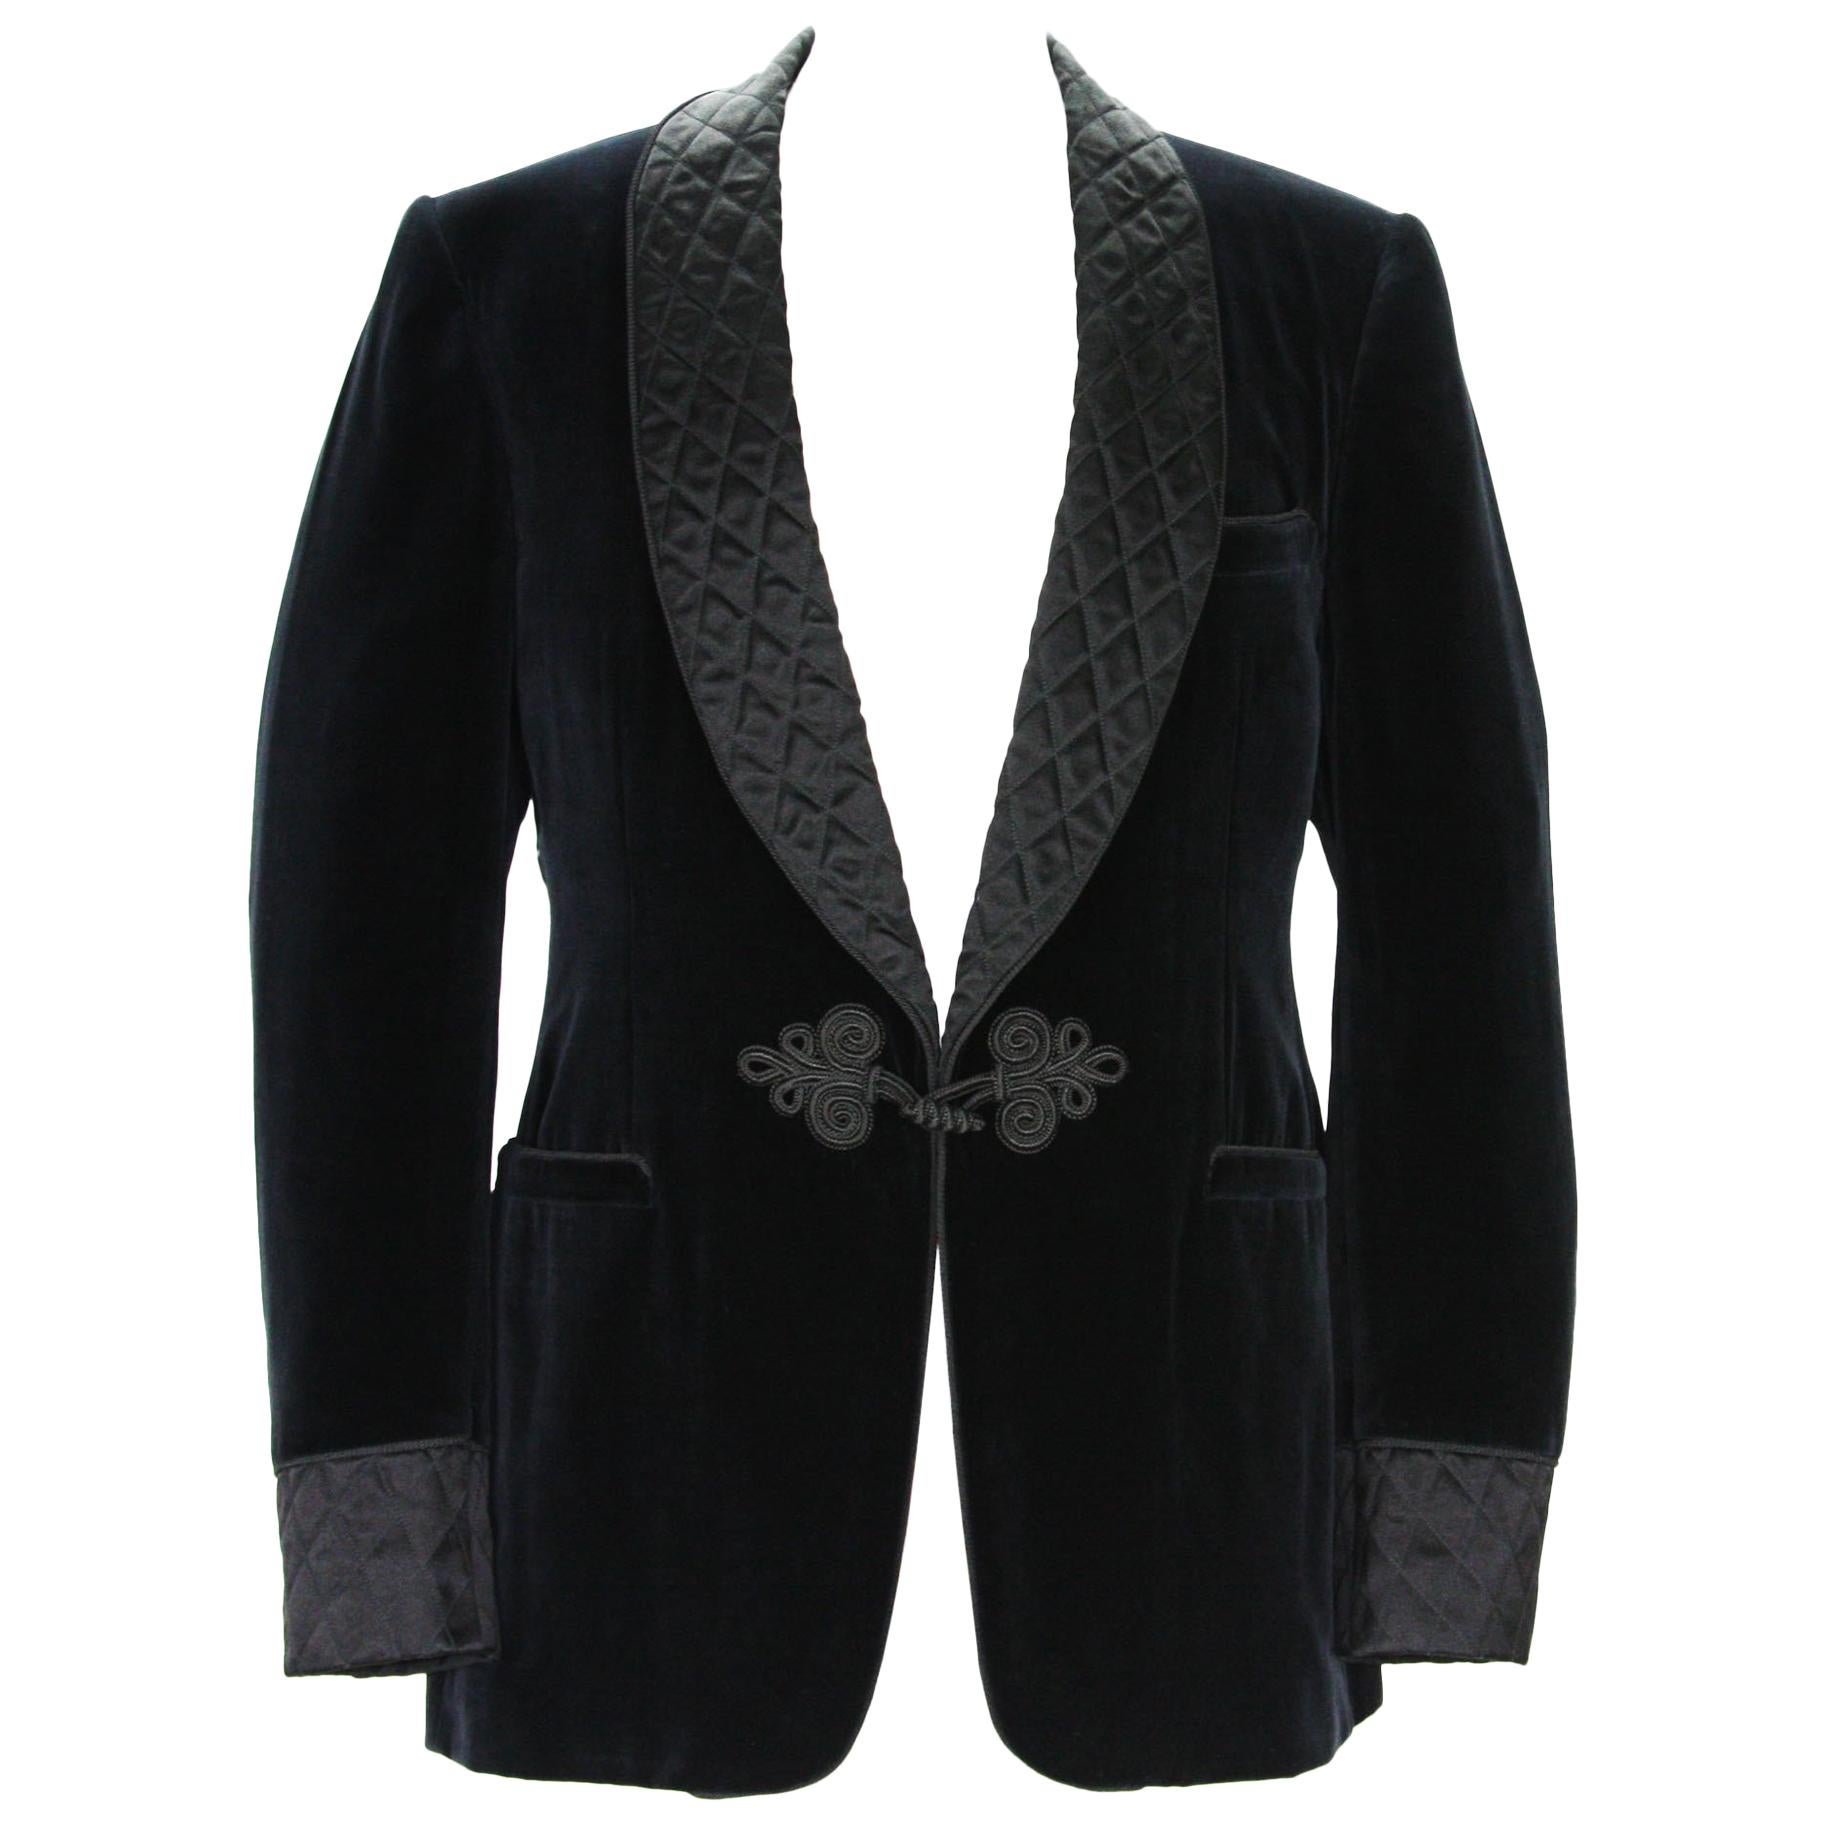 New Tom Ford for Gucci Black Velvet Smoking Dinner Jacket It. 56 R- US 46 R